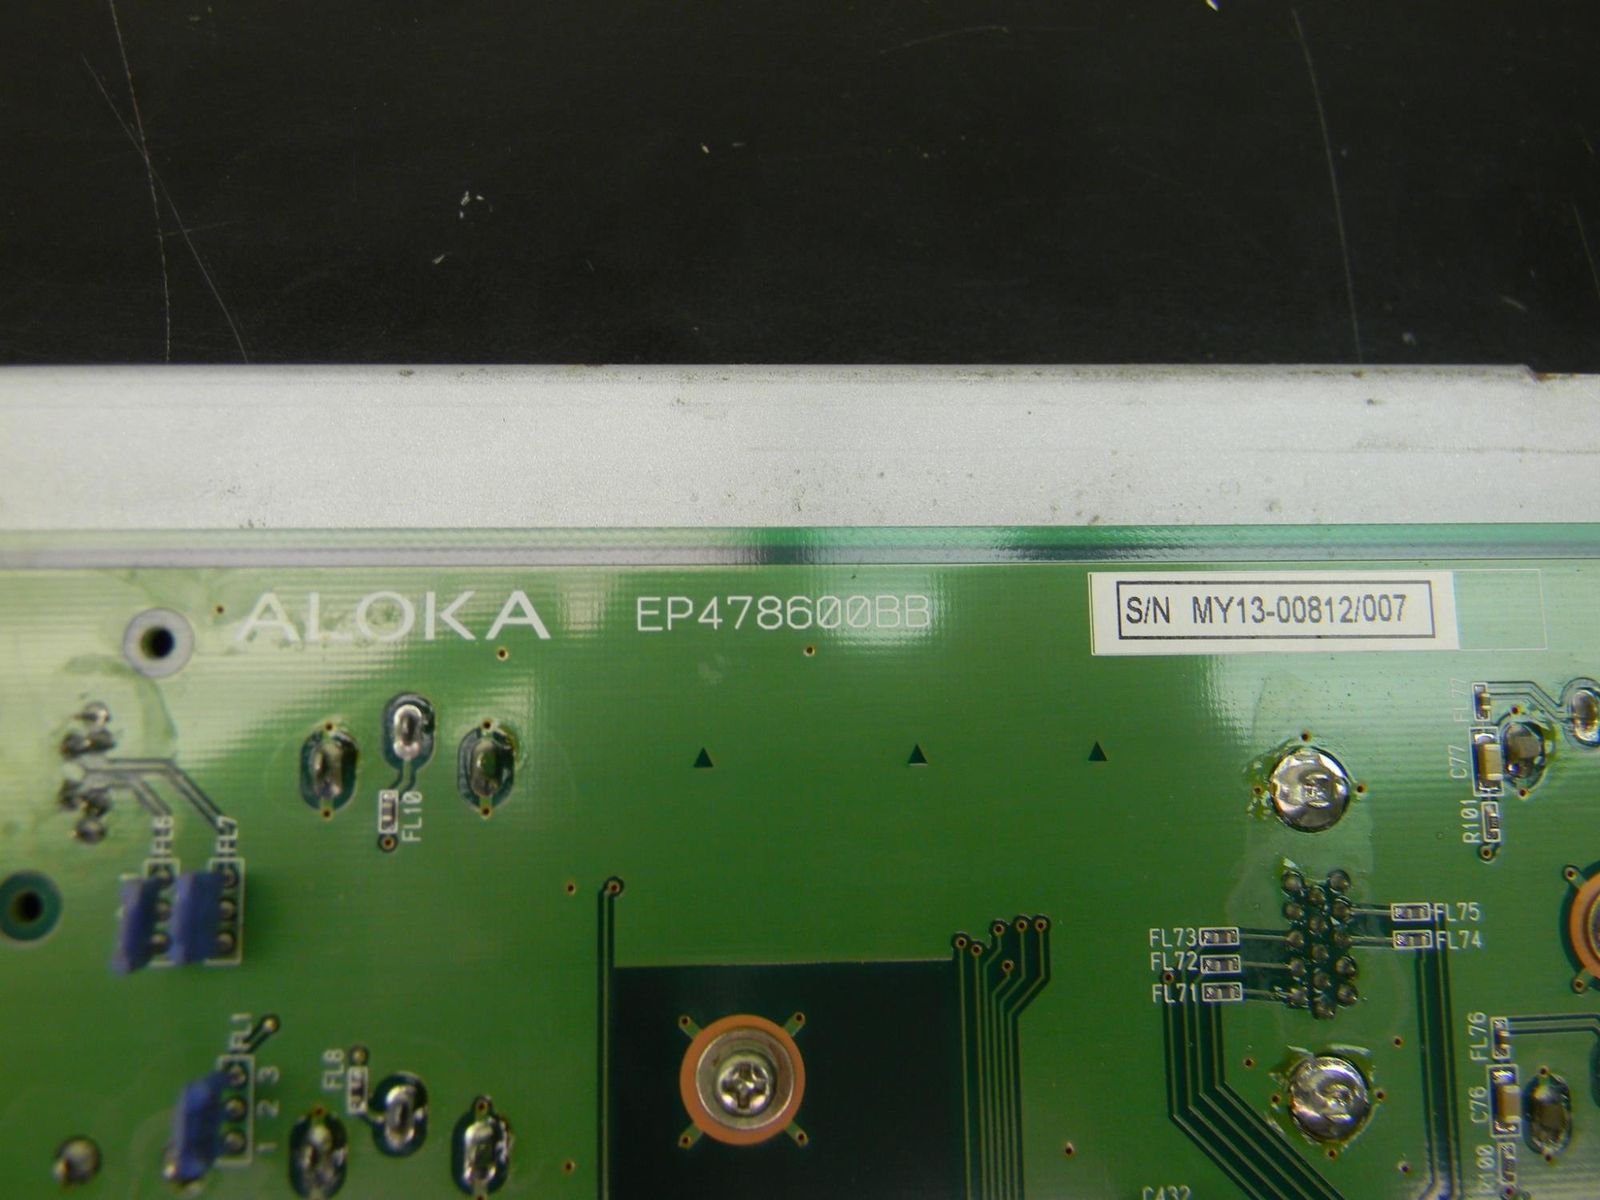 Aloka Prosound Ultrasound Scanner SSD 3500SV BOARD EP478600BB V06011702376 DIAGNOSTIC ULTRASOUND MACHINES FOR SALE